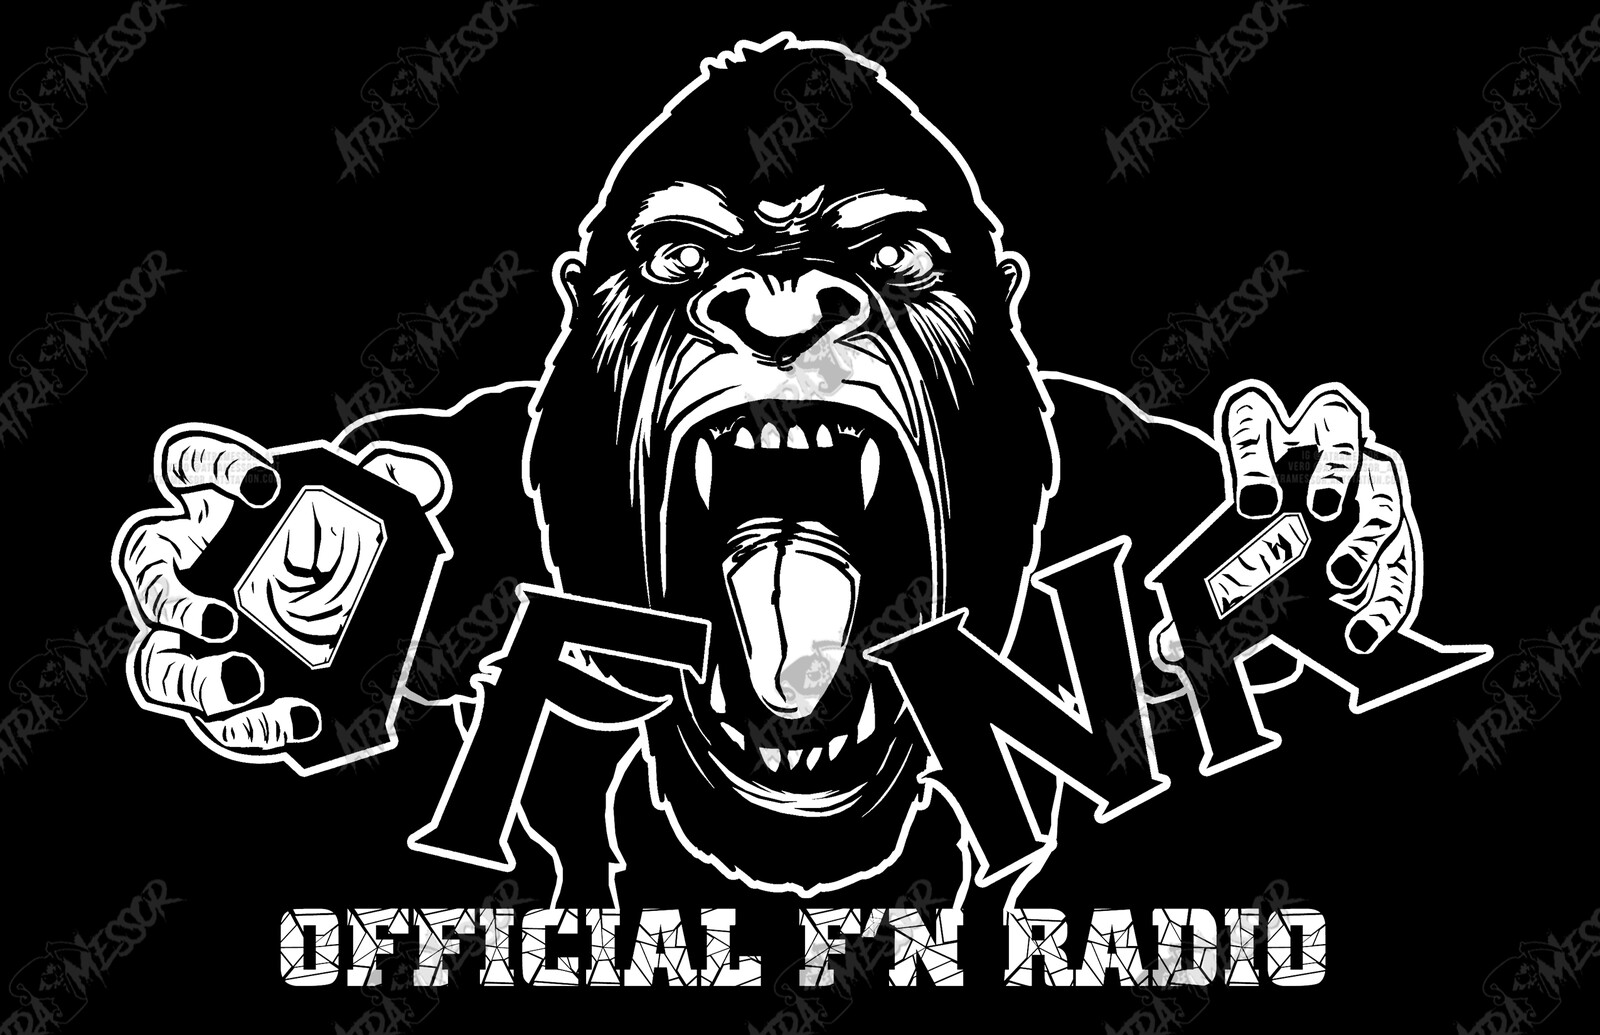 OFNR Gorilla merch for Official F'N Radio